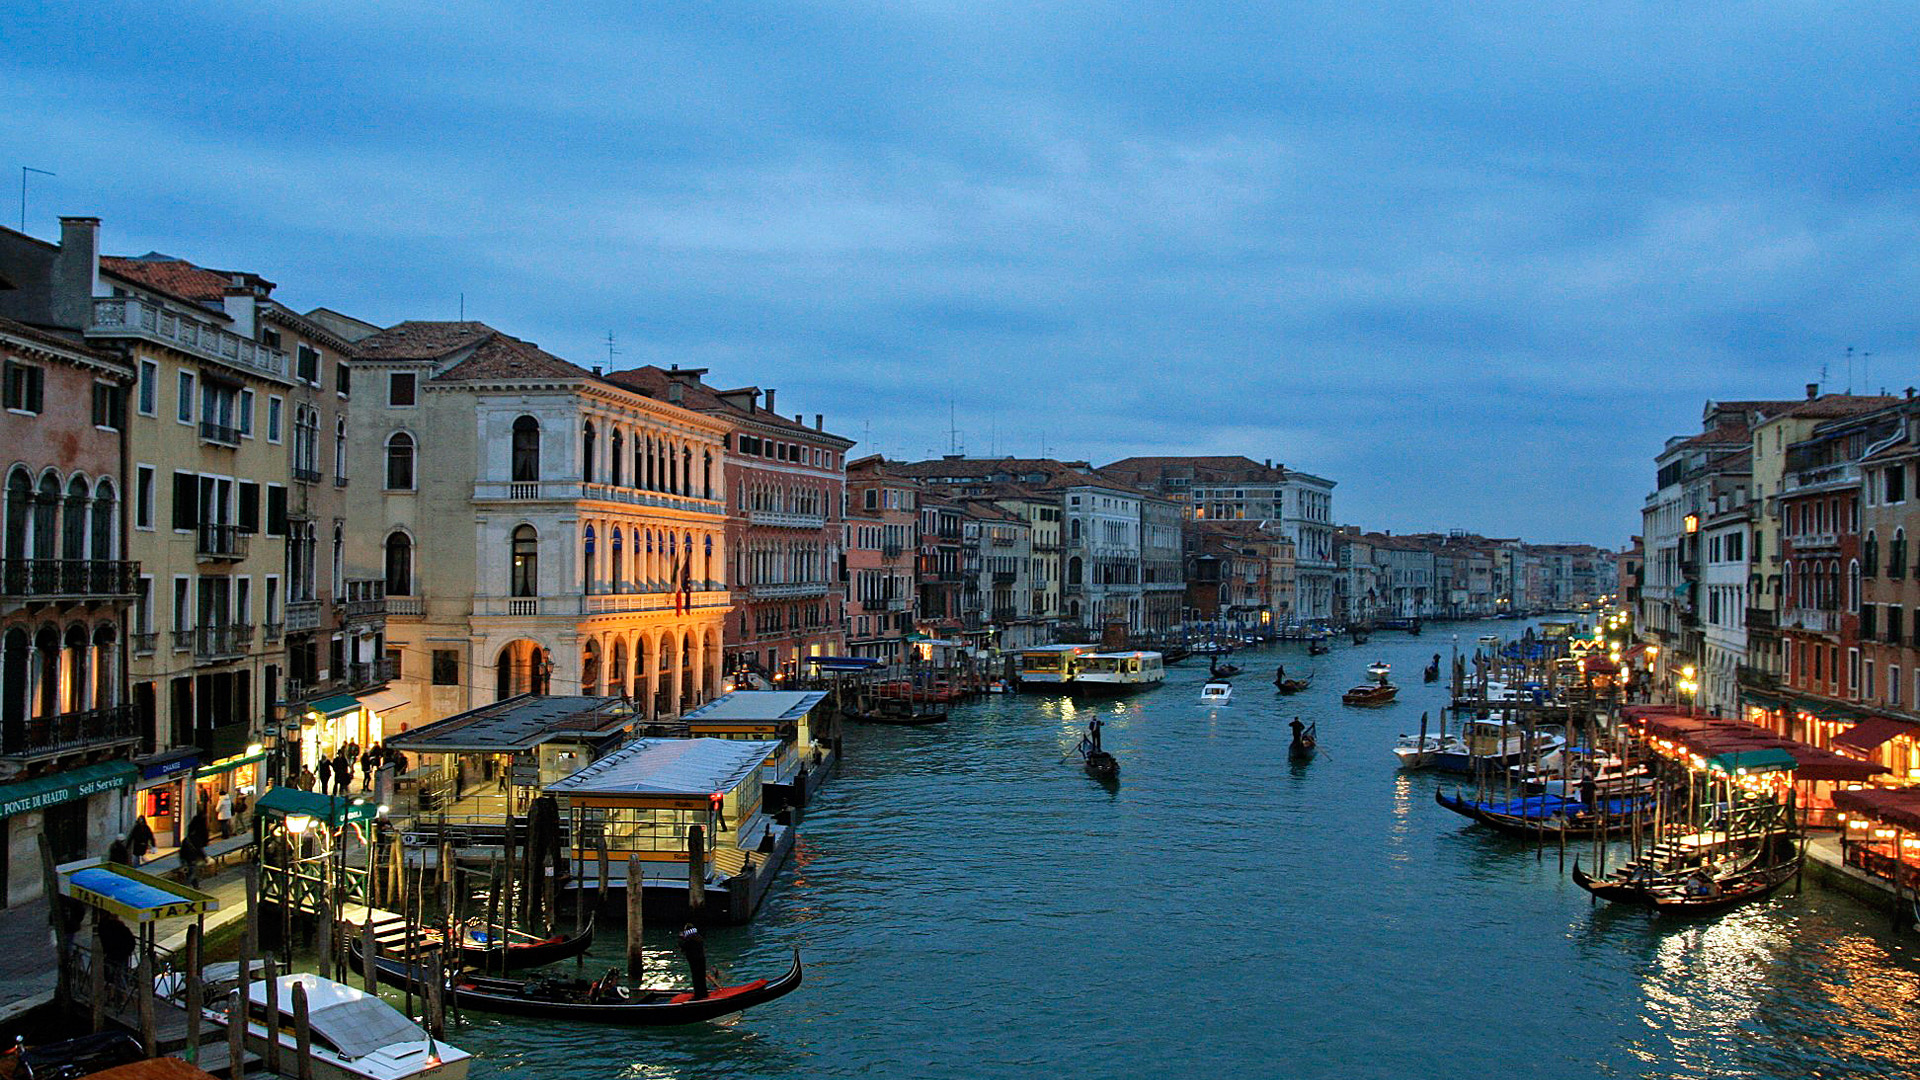 The Grand Canal of Venice, Italy бесплатно